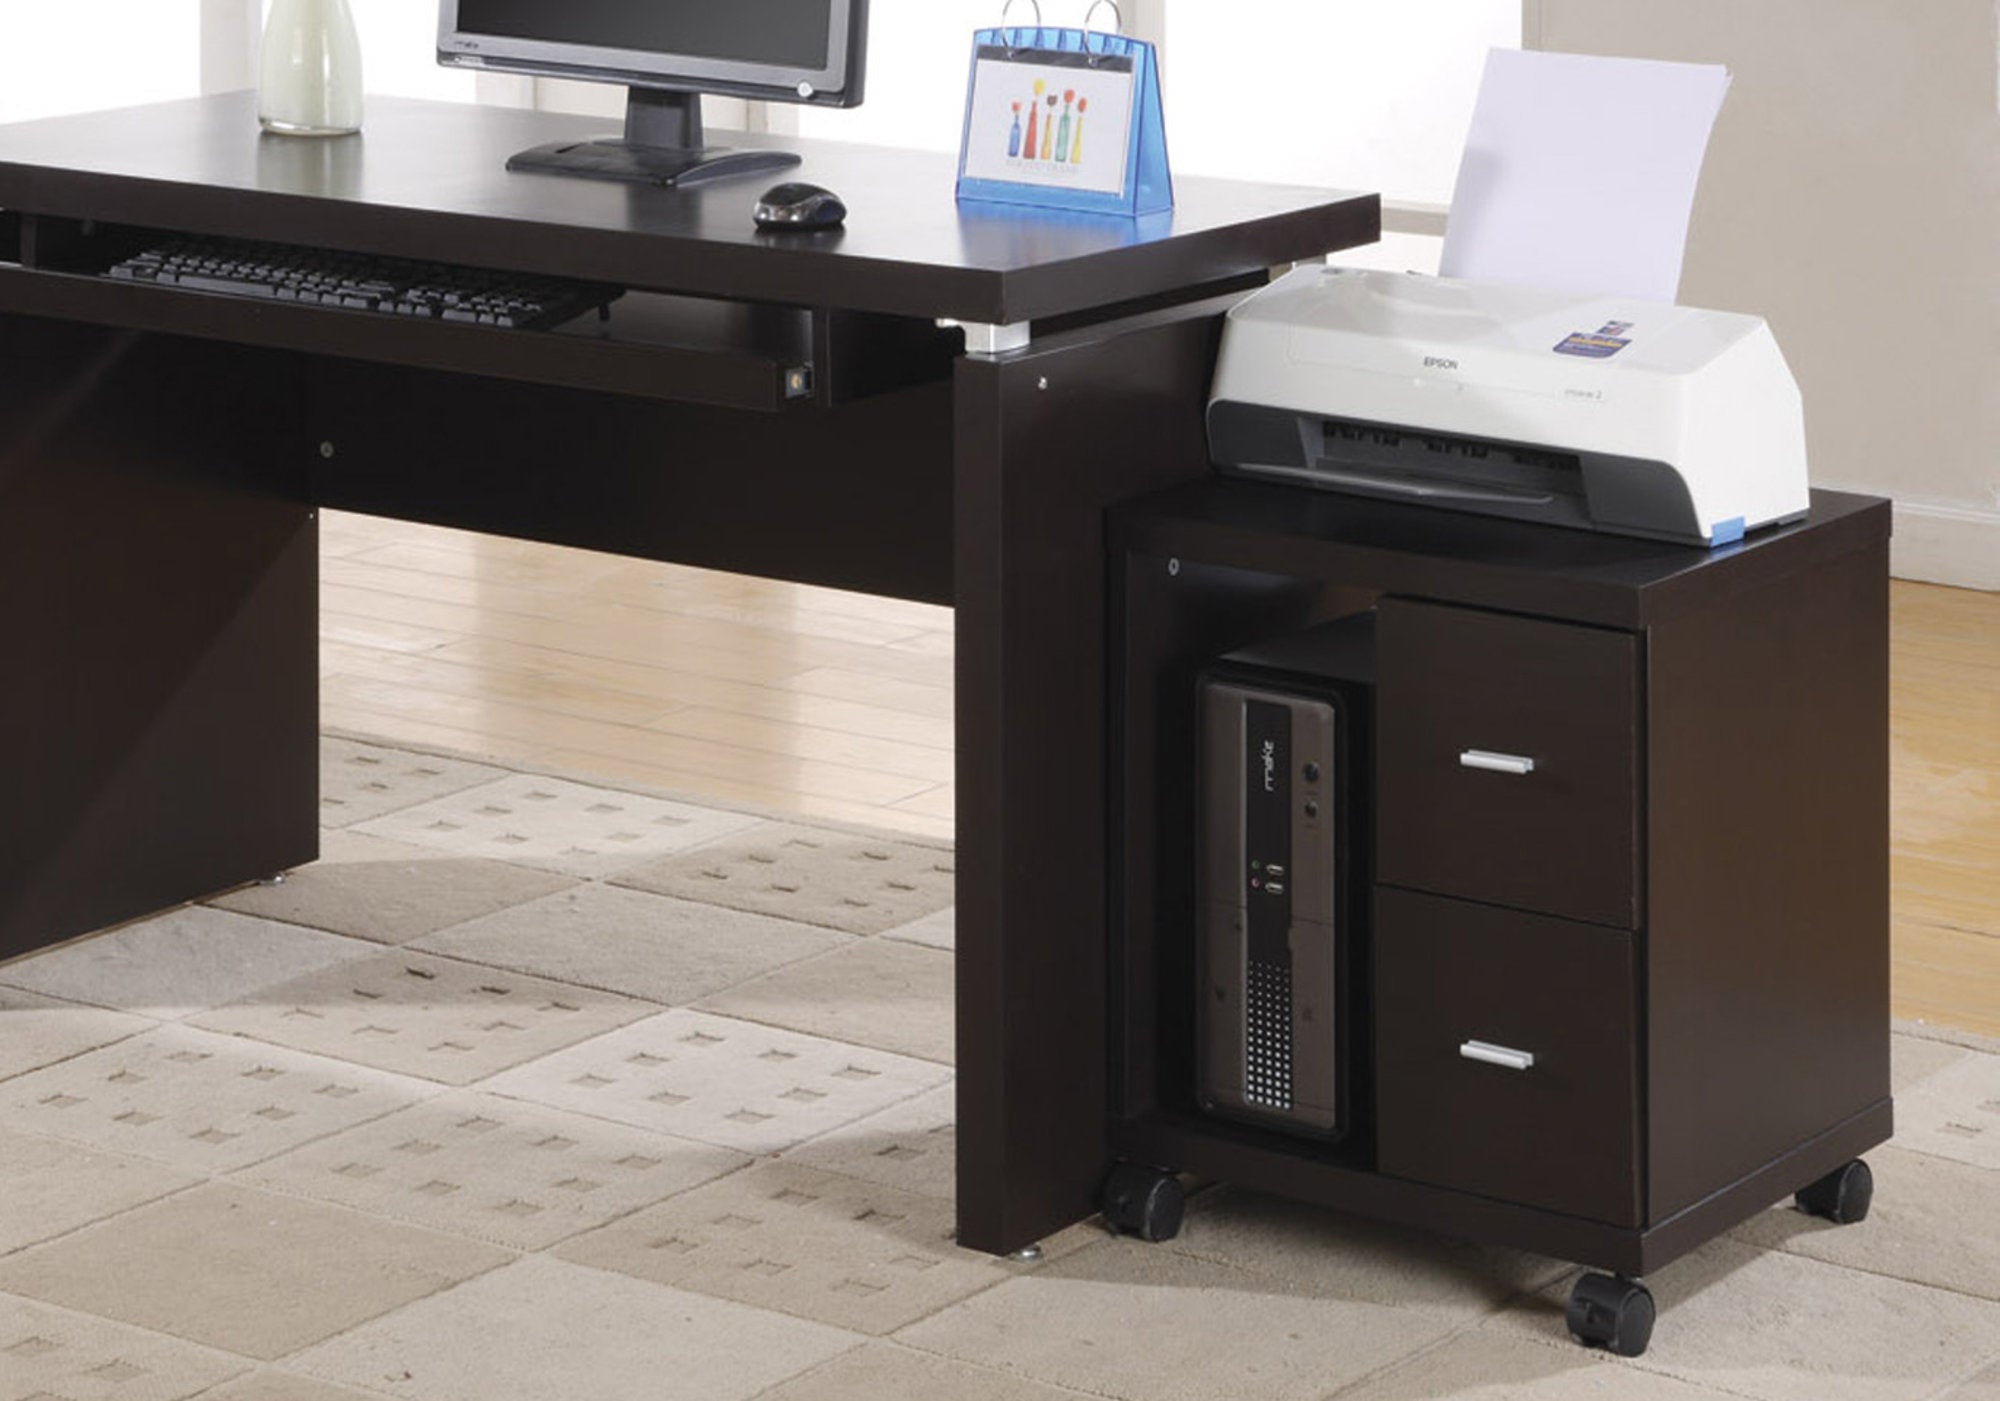 MN-667004    Office, File Cabinet, Printer Cart, Rolling File Cabinet, Mobile, Storage, Laminate, Dark Brown, Contemporary, Modern